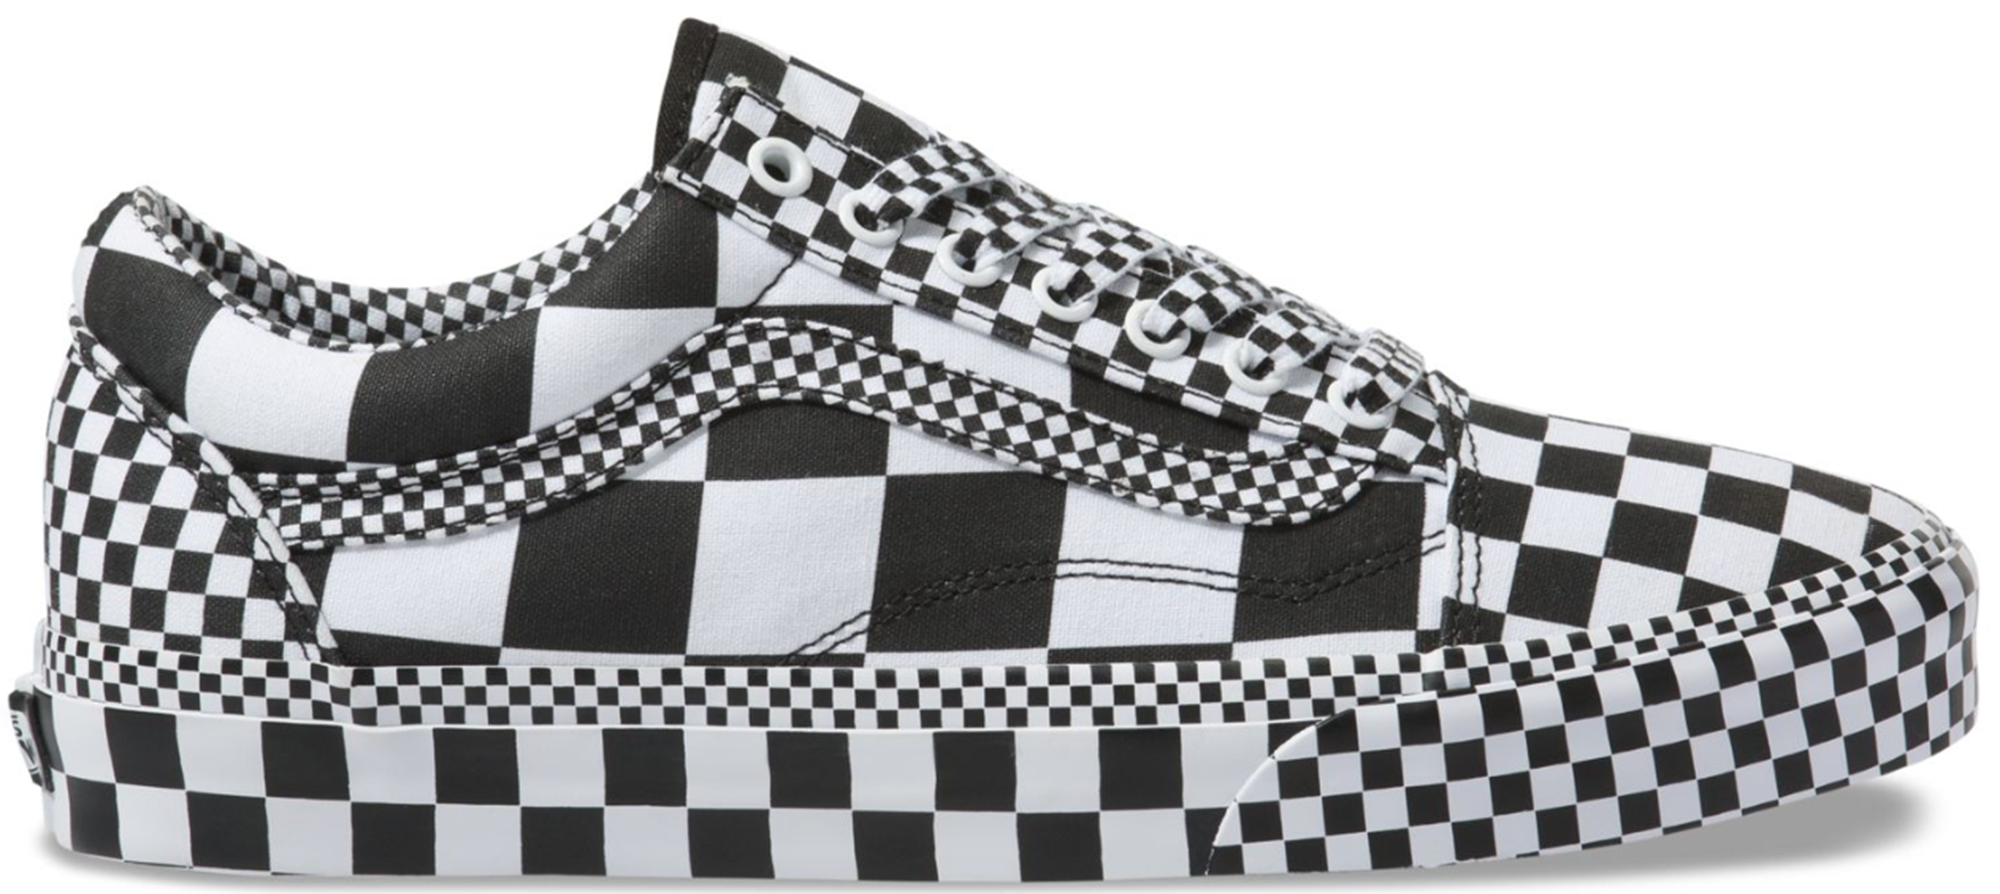 vans old skool black and white checkered